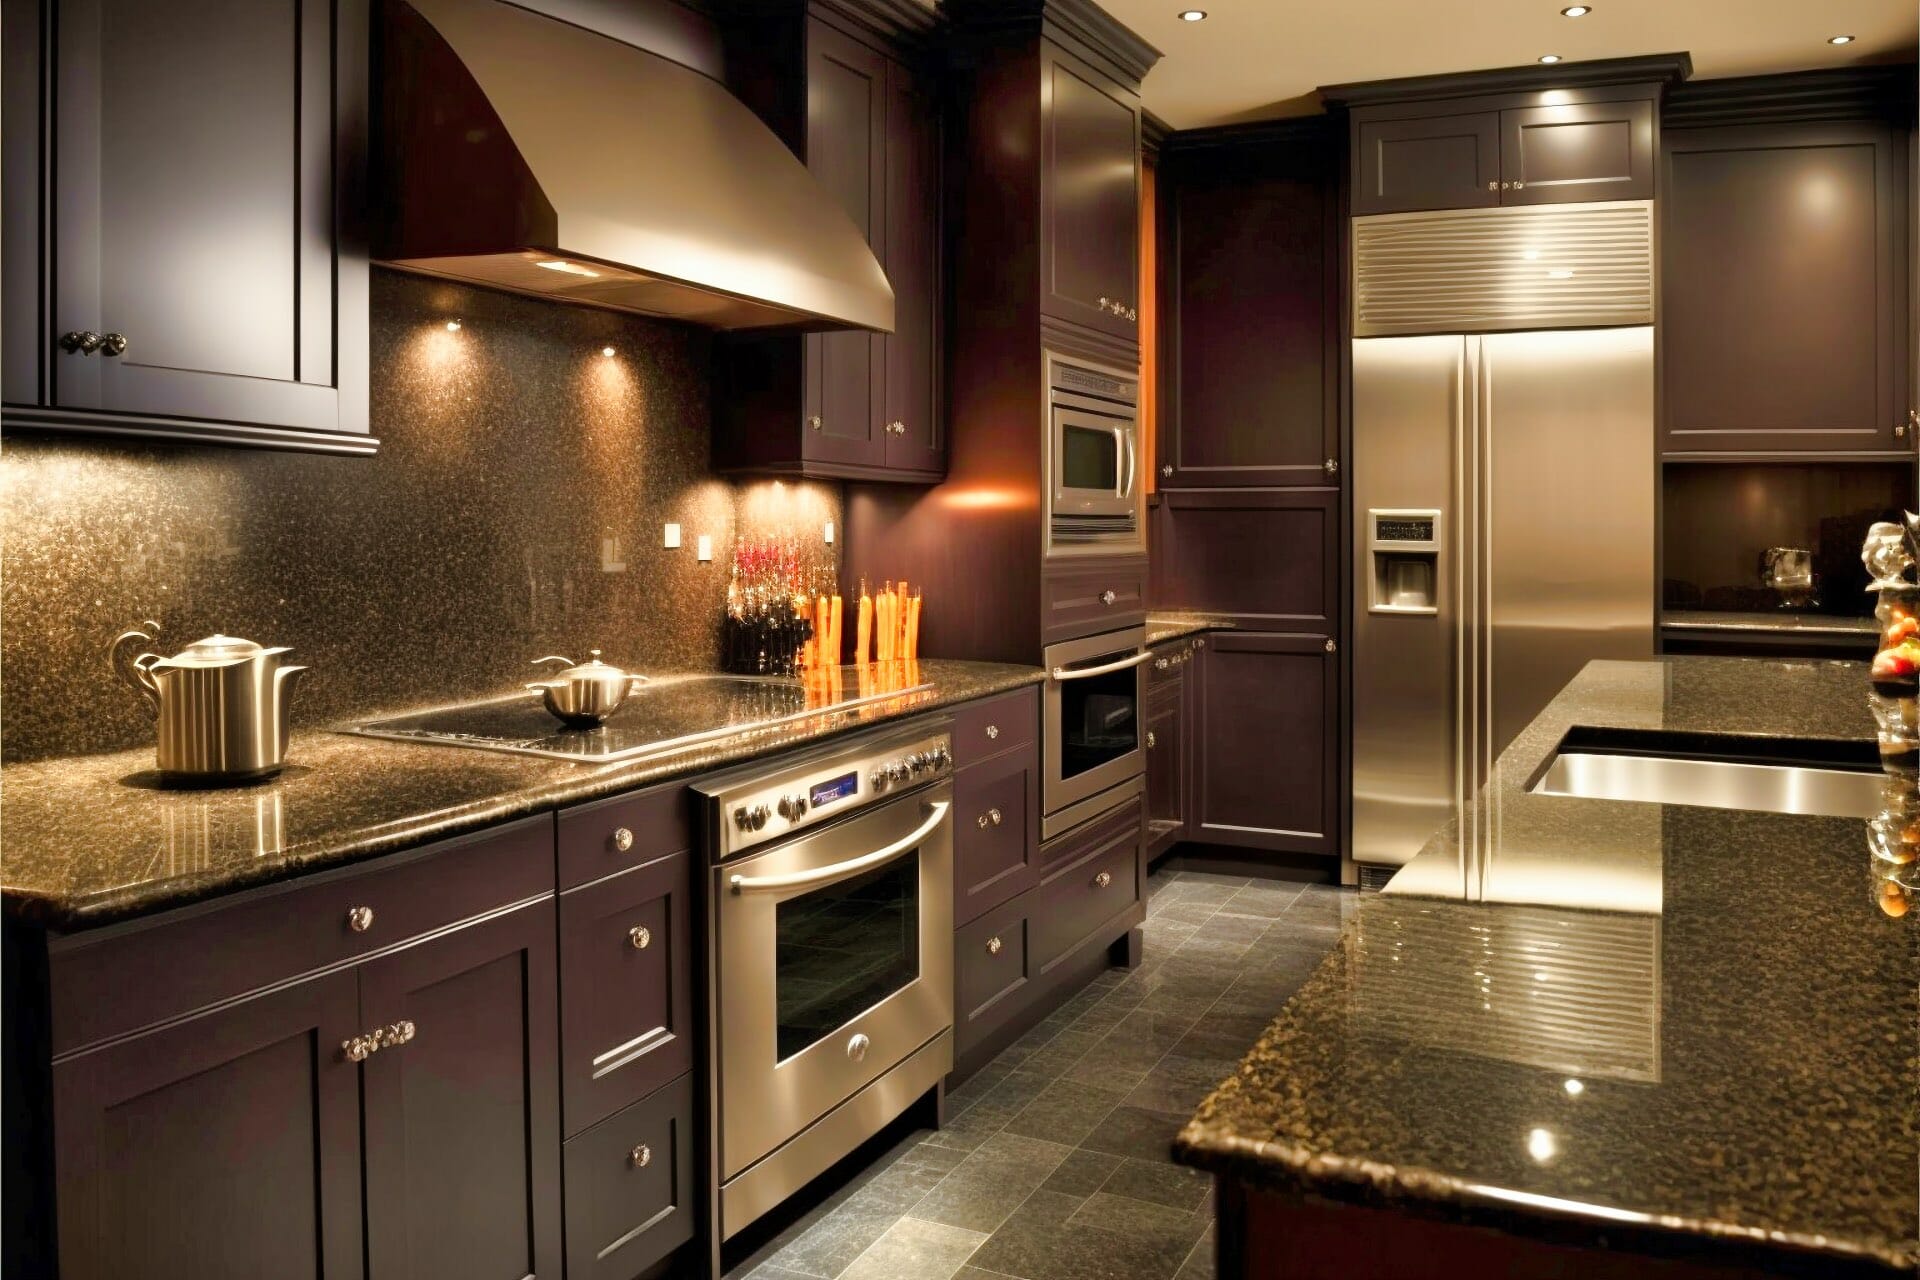 Moderne Küche Mit Dunkler Granit-Arbeitsplatte